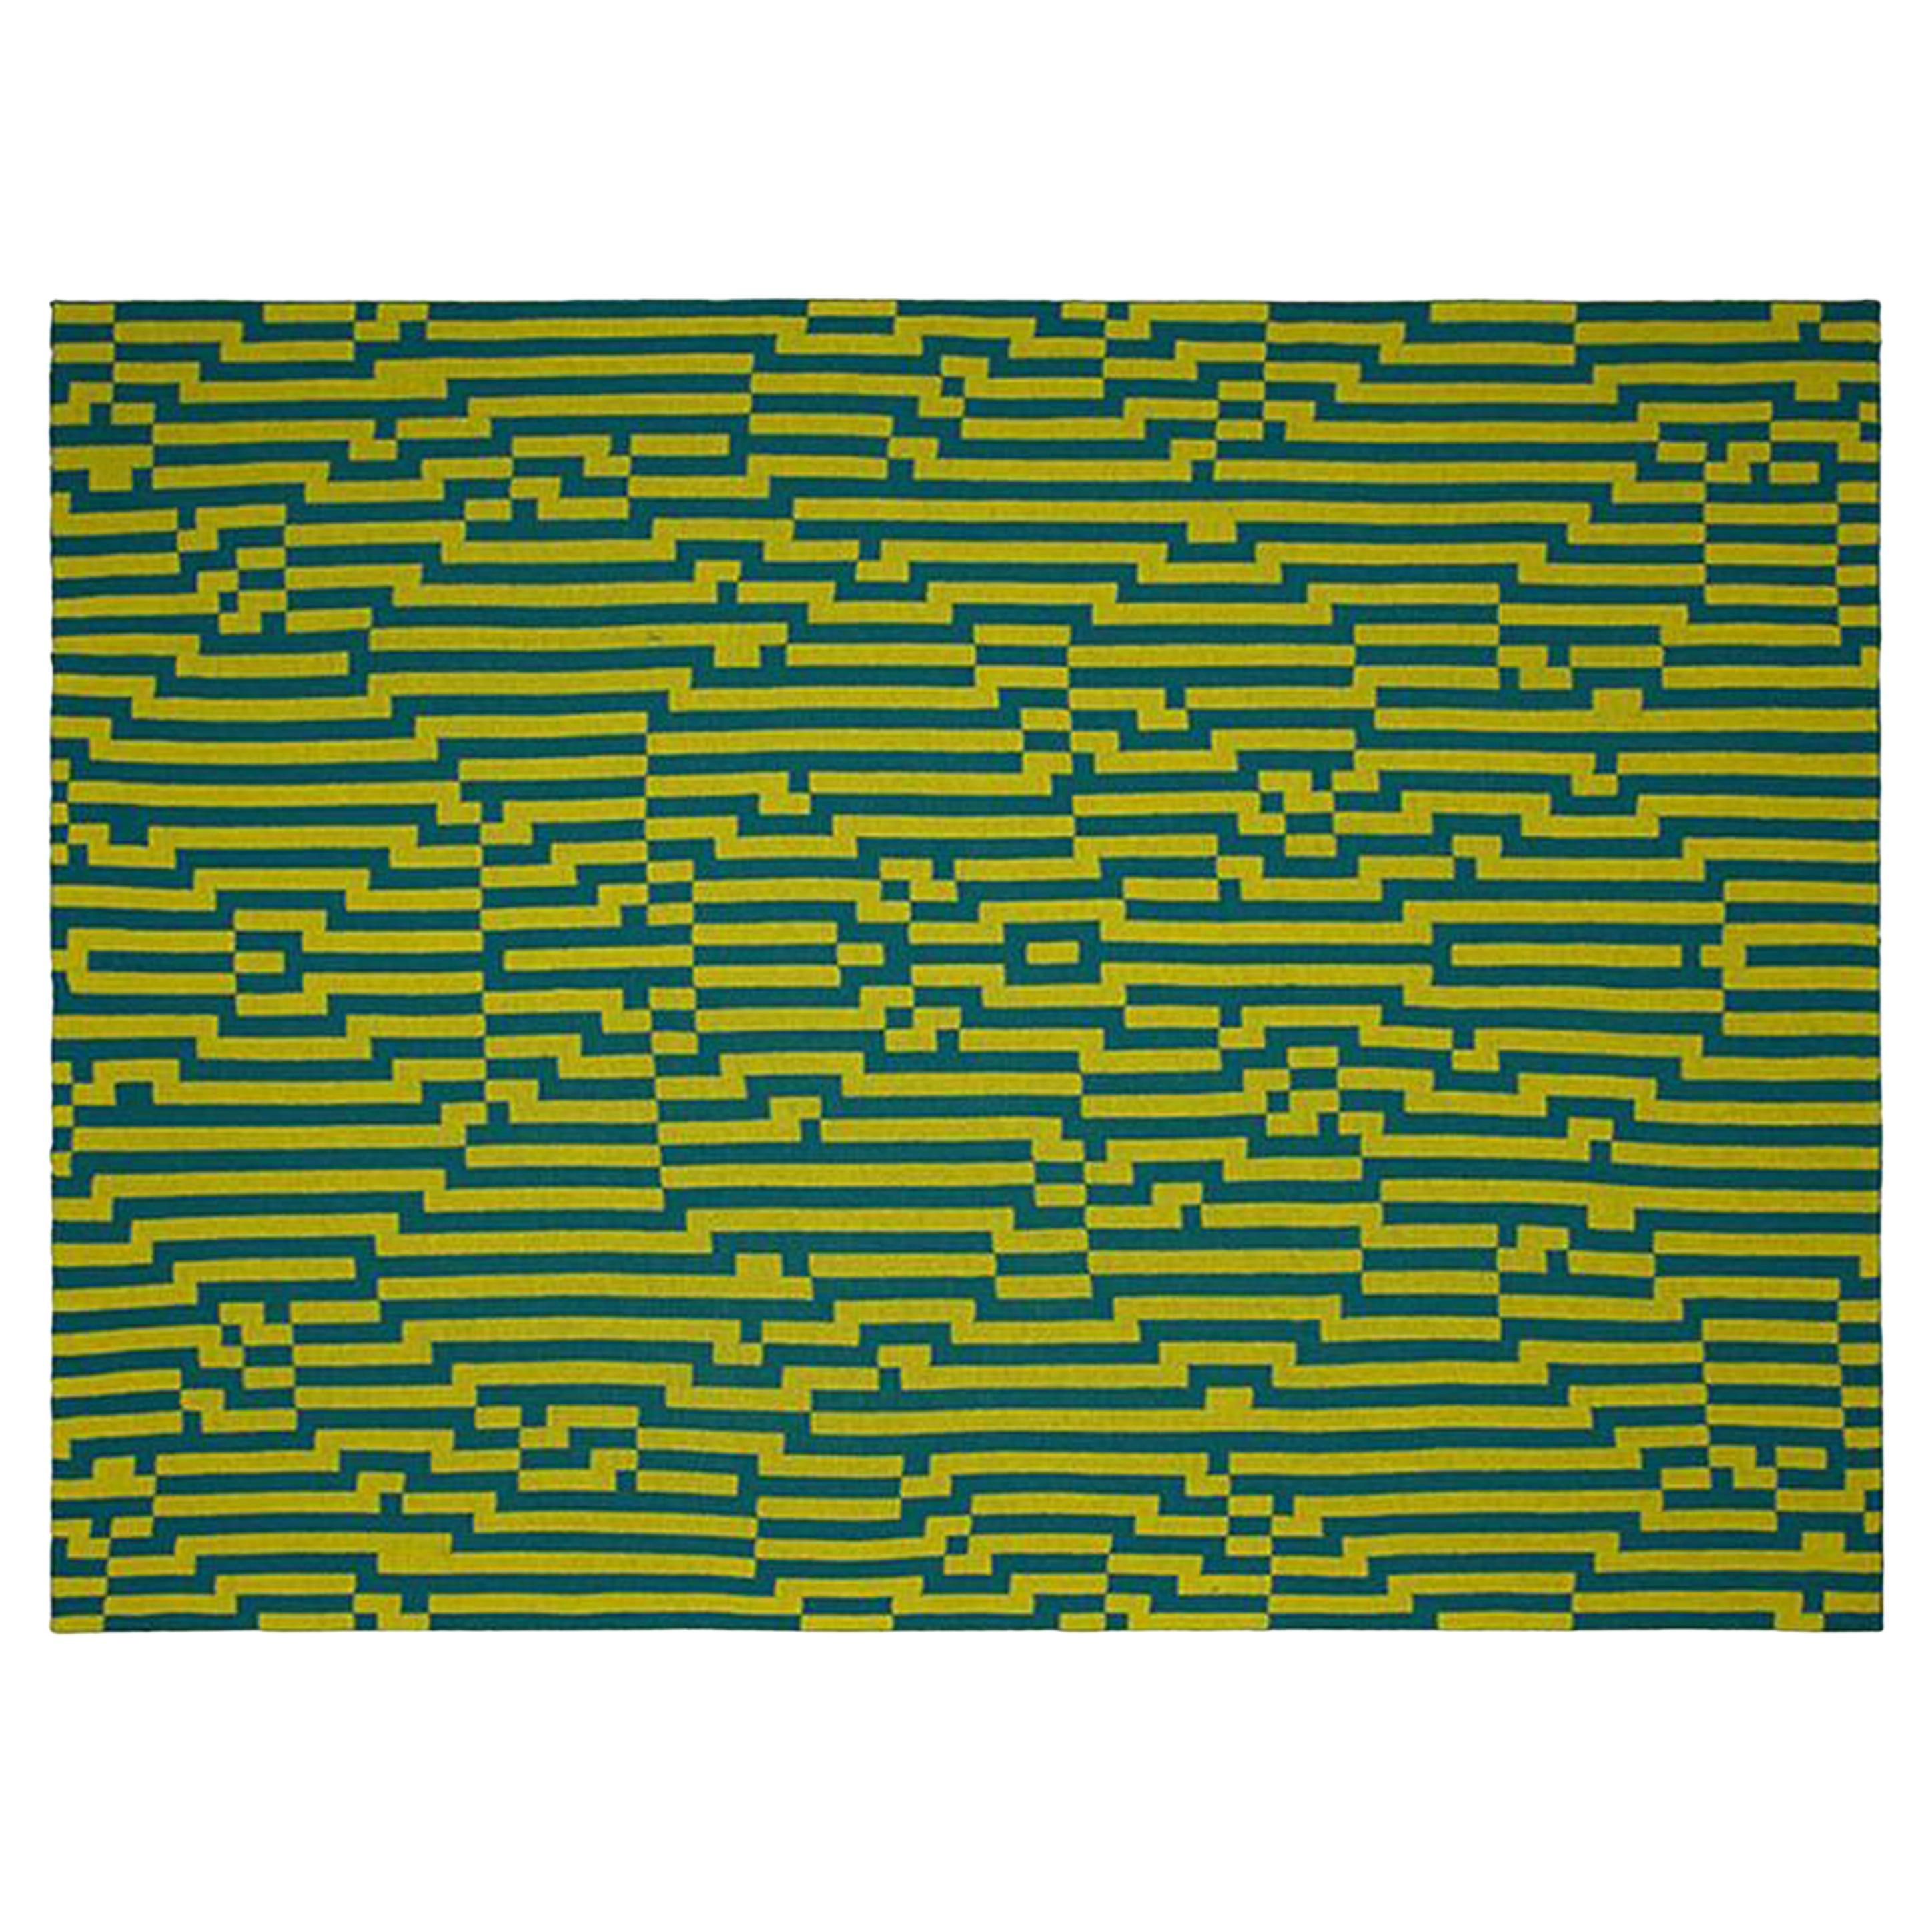 Handwoven Wool Throw in Yellow and Green, by Cristian Zuzunaga, Spain 2022